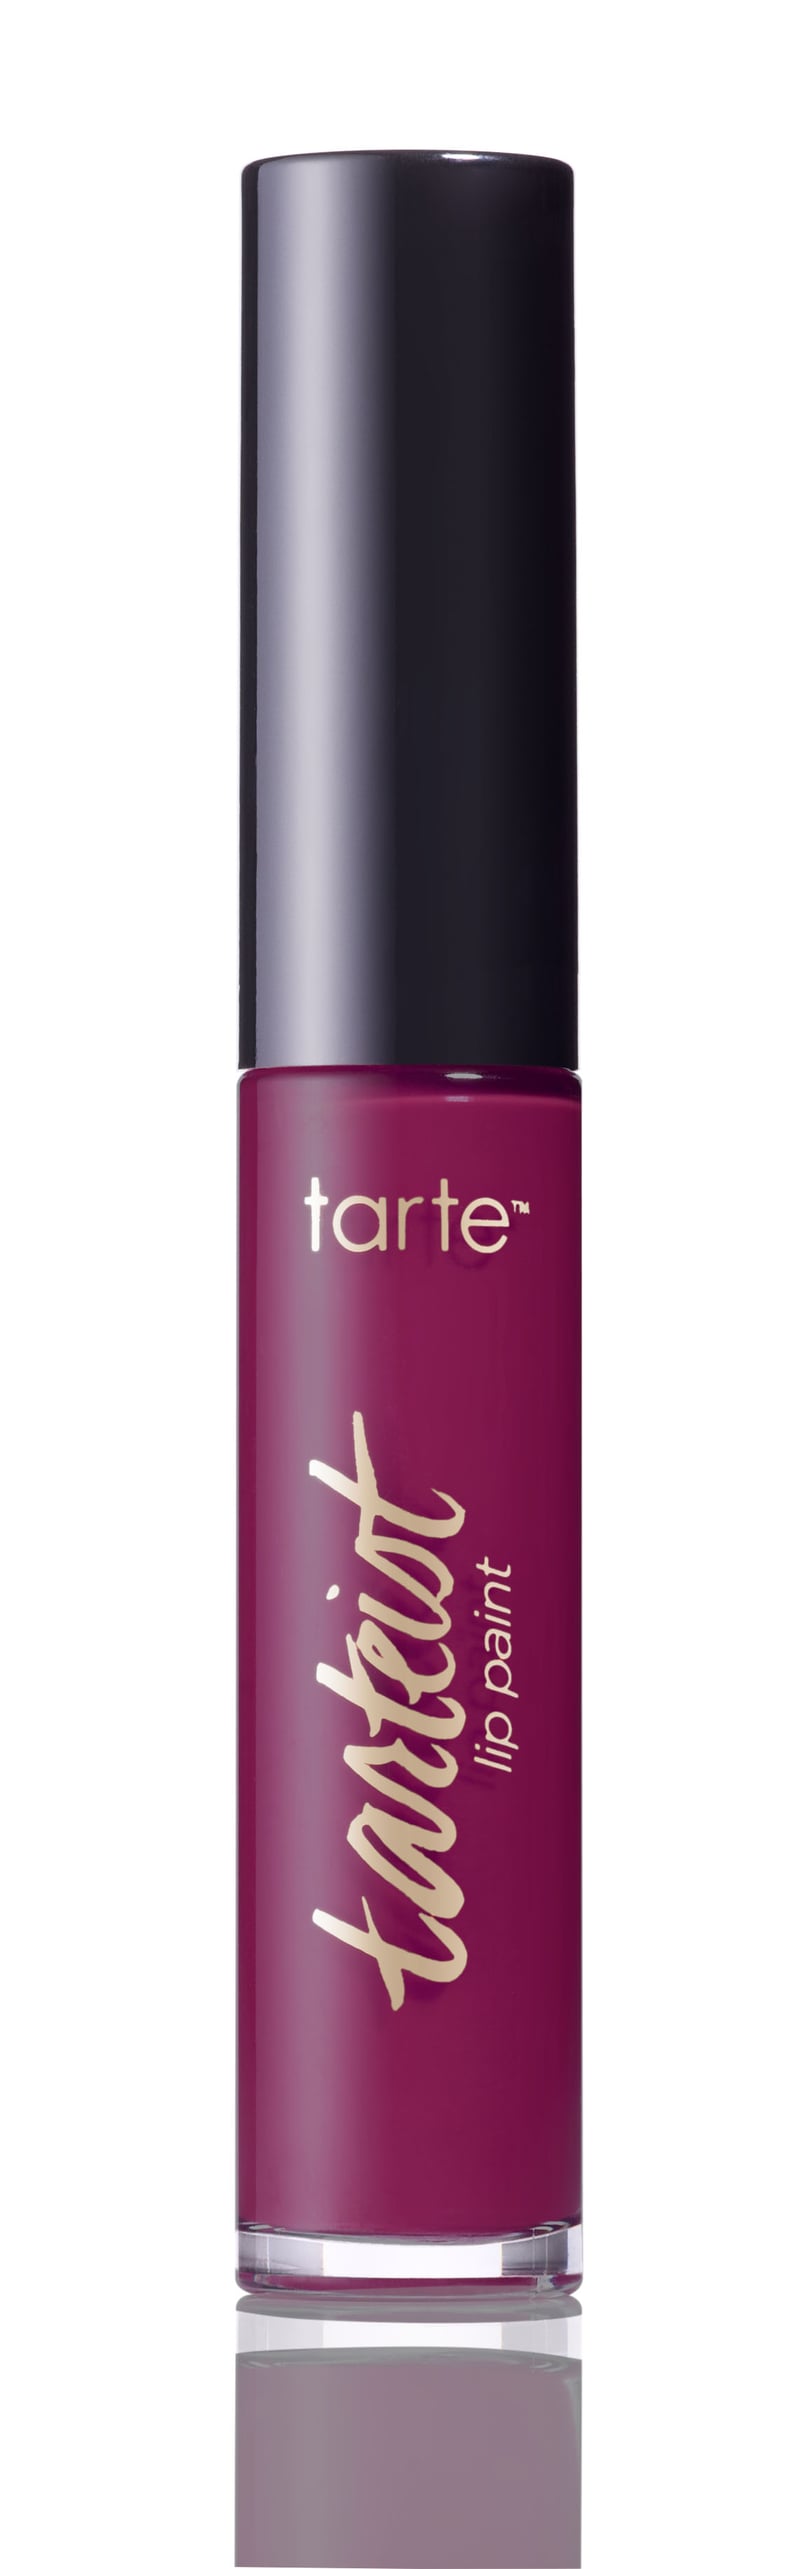 Tarte Cosmetics Tarteist Lip Paint in Twerk